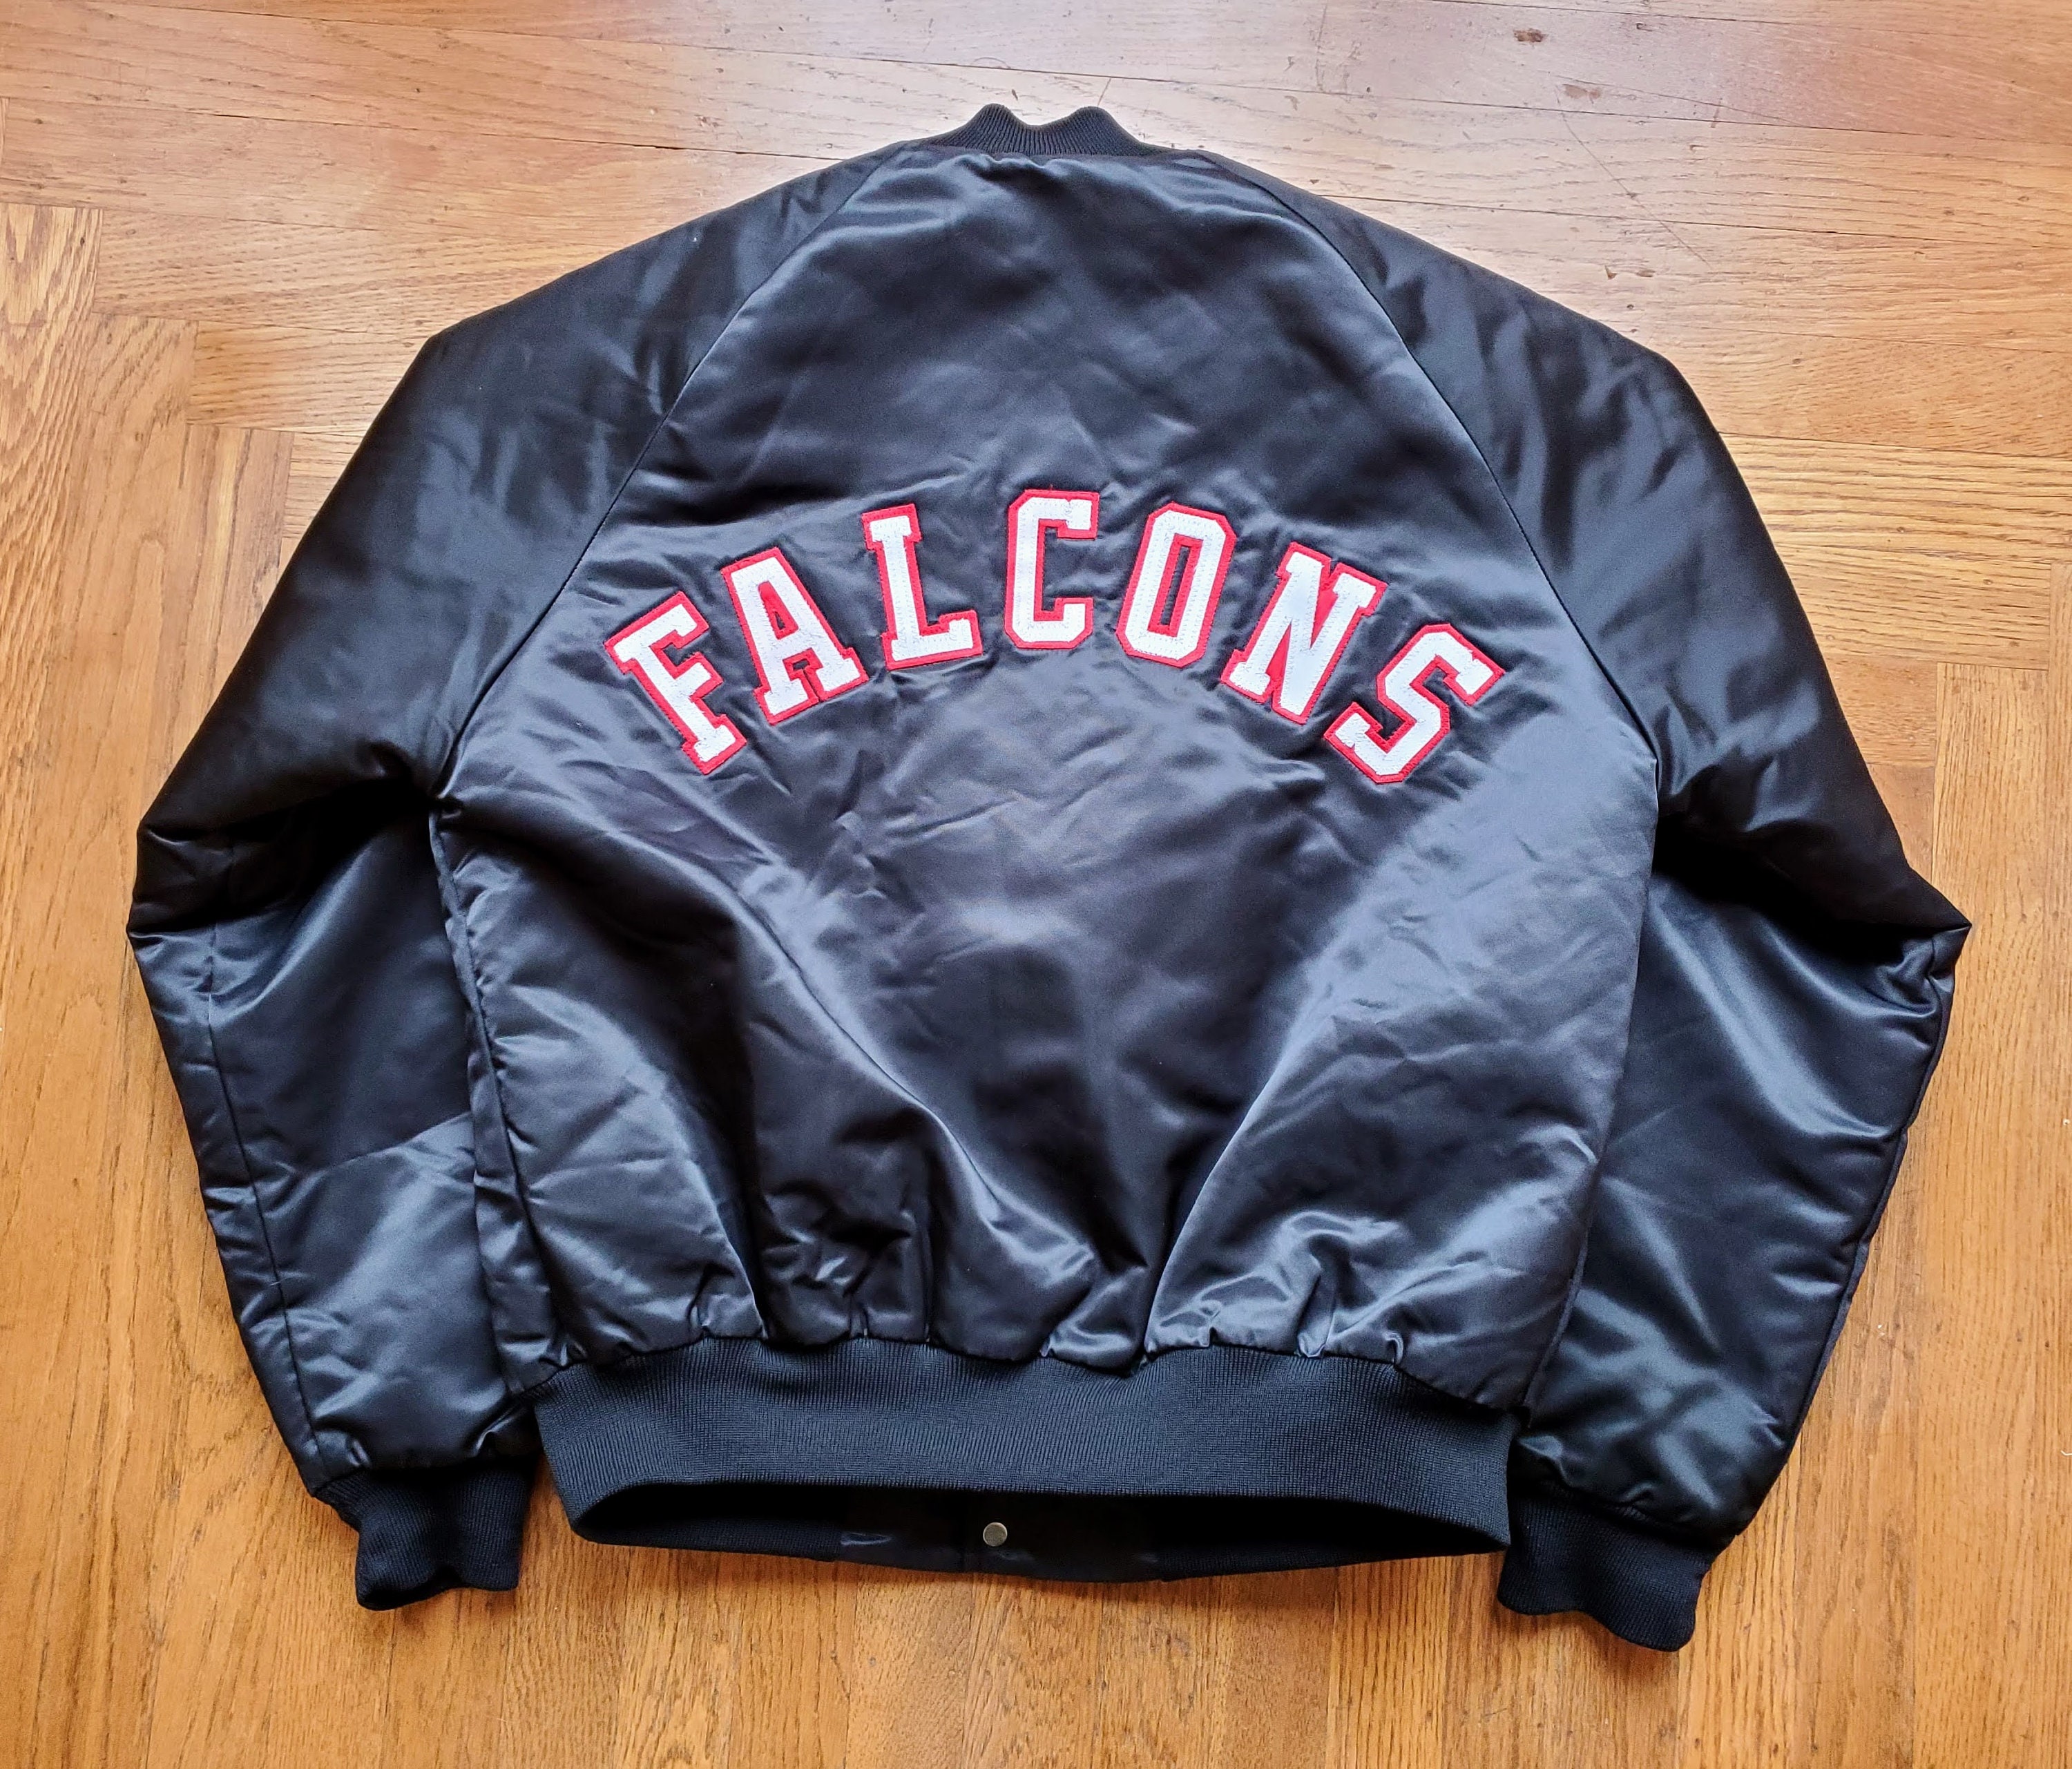 Atlanta Falcons satin jacket - L / XL